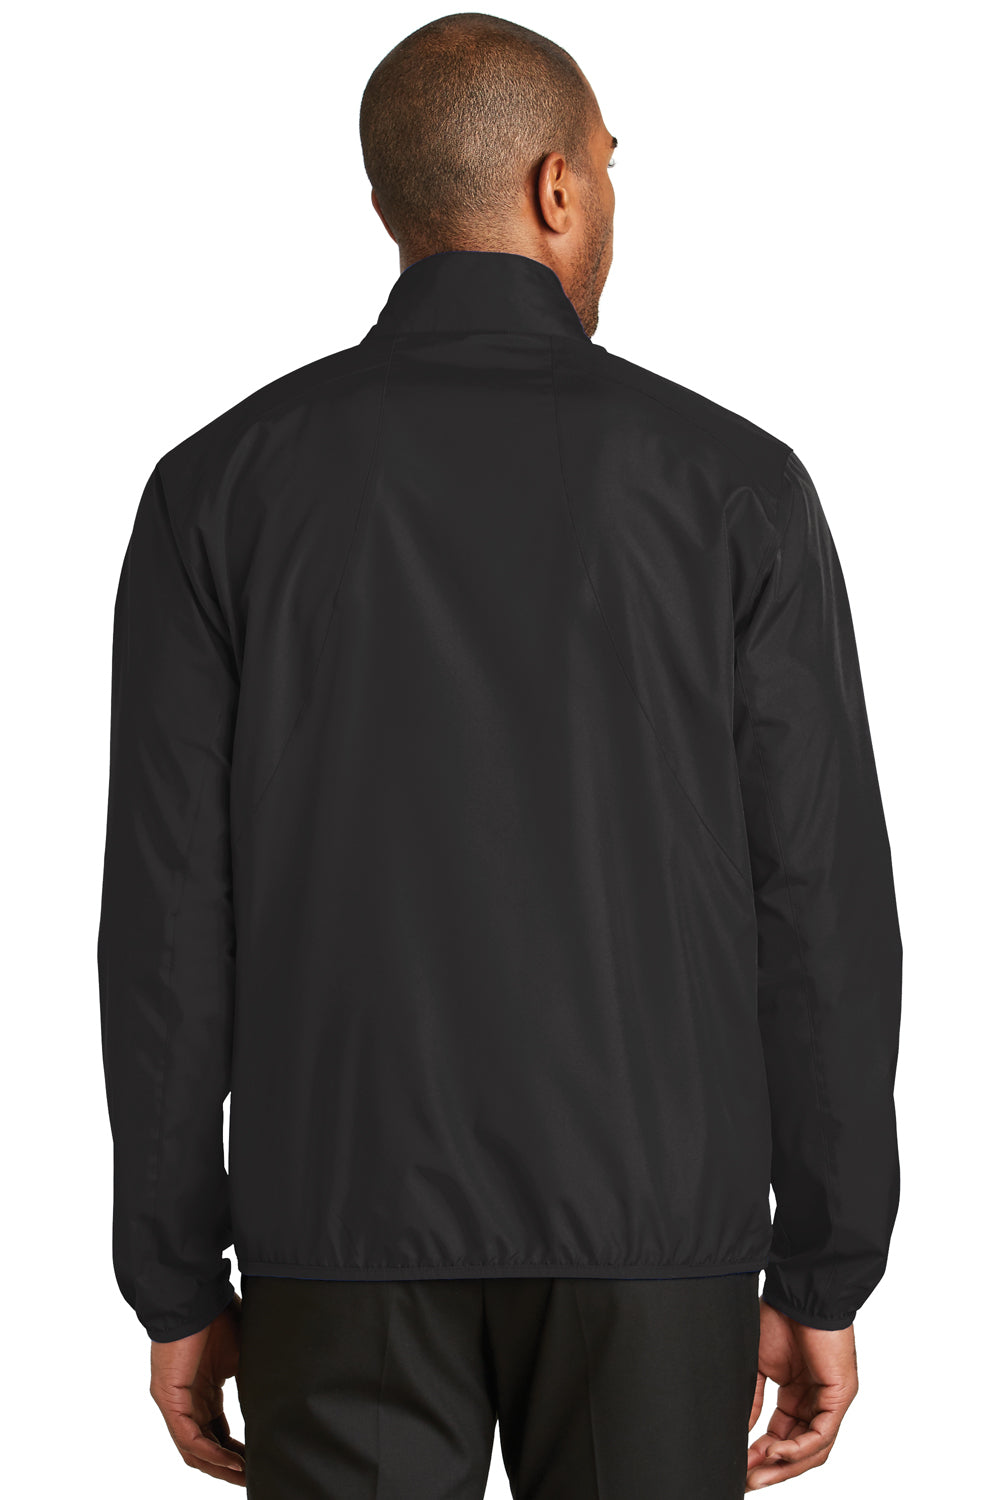 Port Authority J344 Mens Zephyr Wind & Water Resistant Full Zip Jacket Black Back